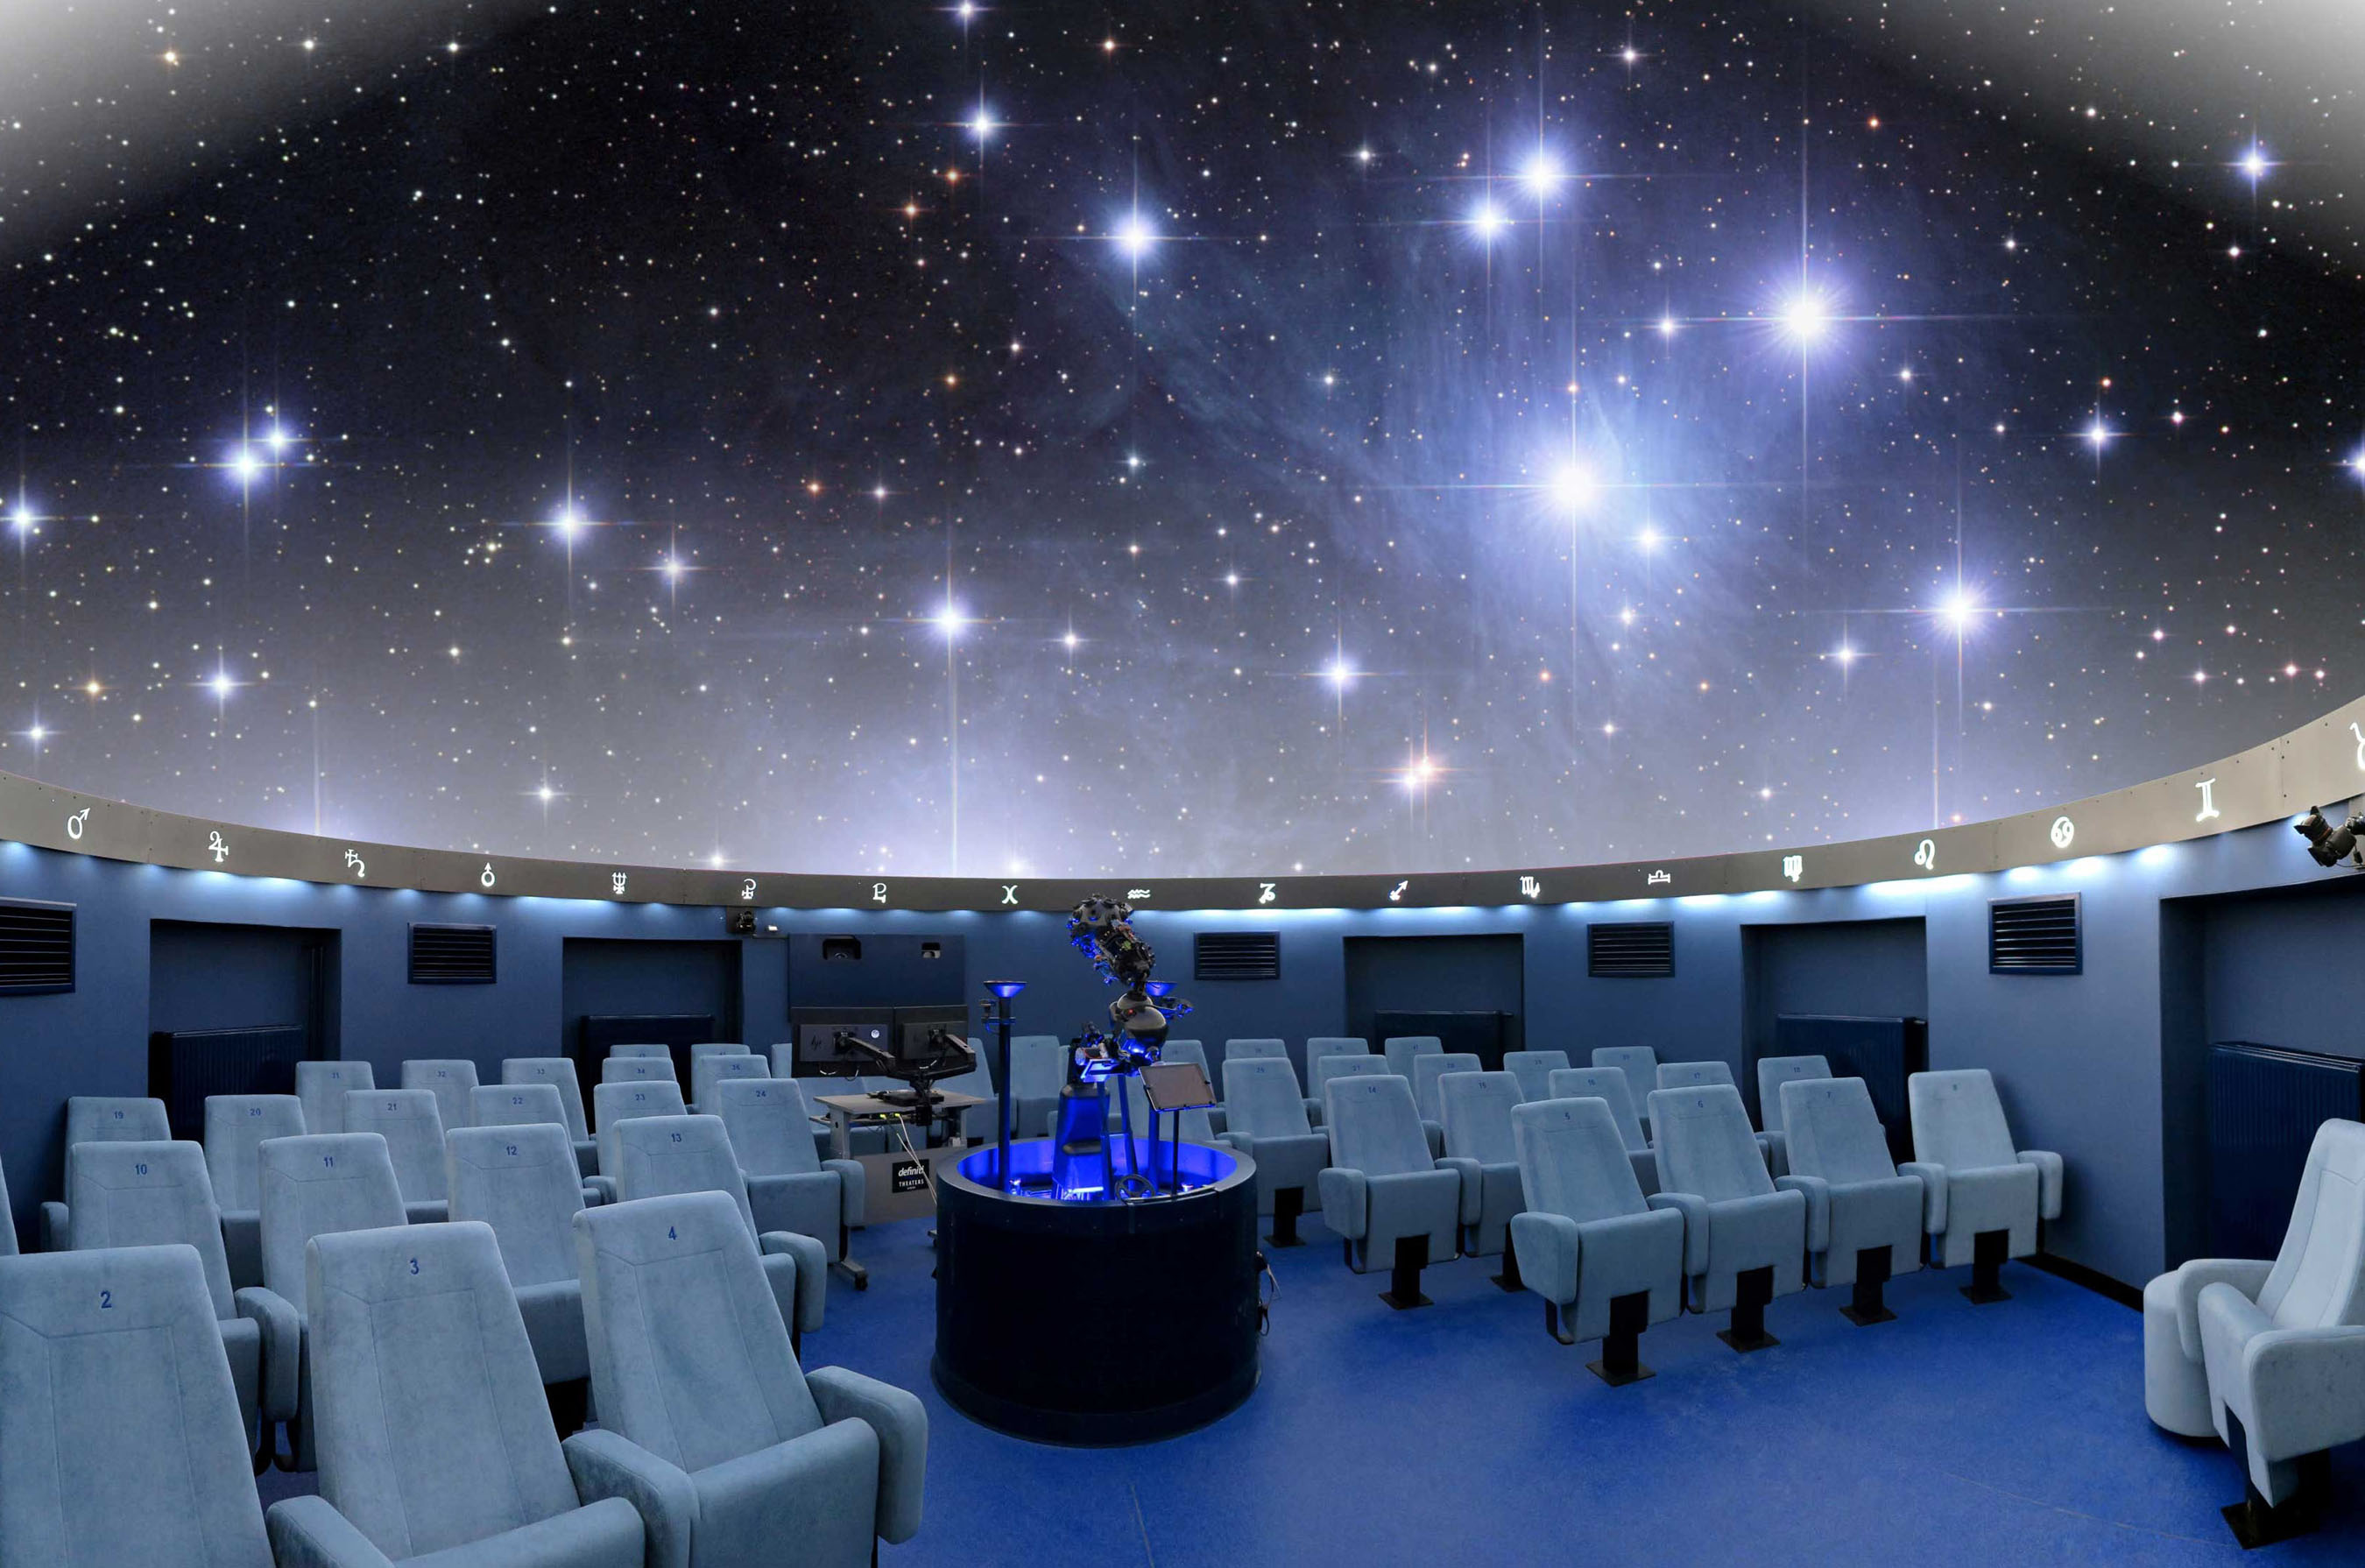 Observatory and planetarium, esk Budjovice, Stargazing, Astronomy education, 2700x1790 HD Desktop